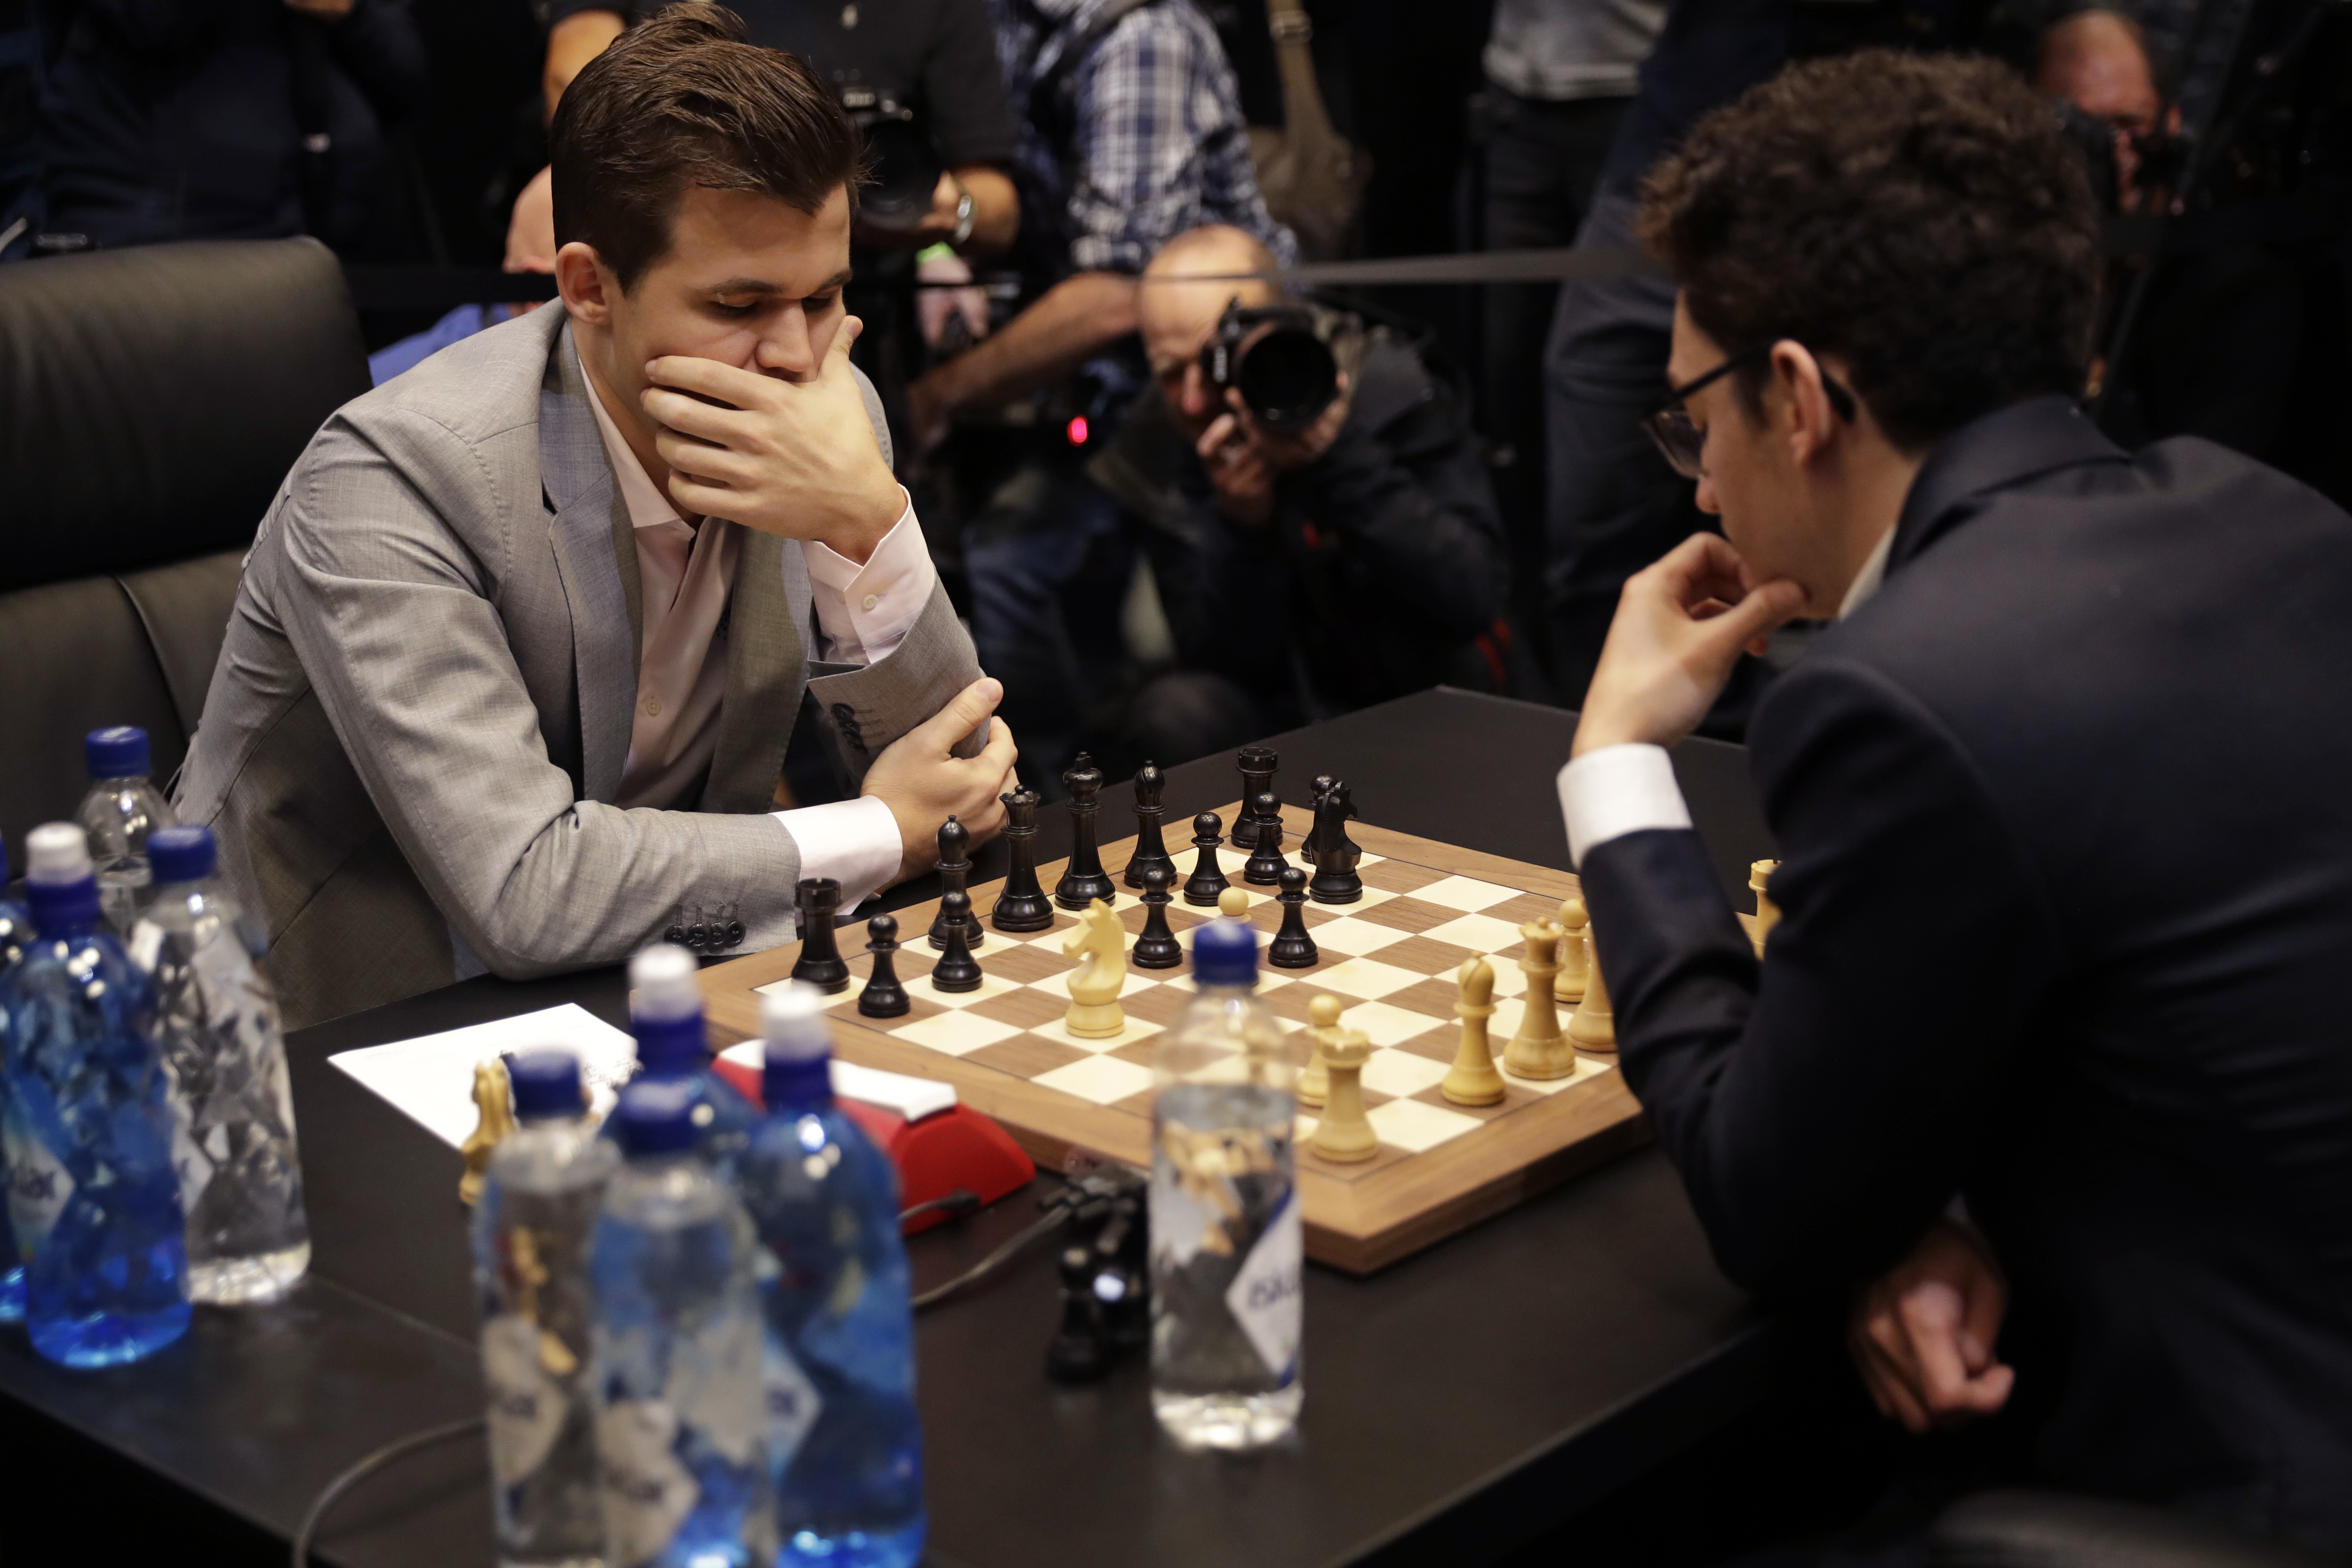 Magnus Carlsen thwarts Game 5 ambush in draw with Fabiano Caruana